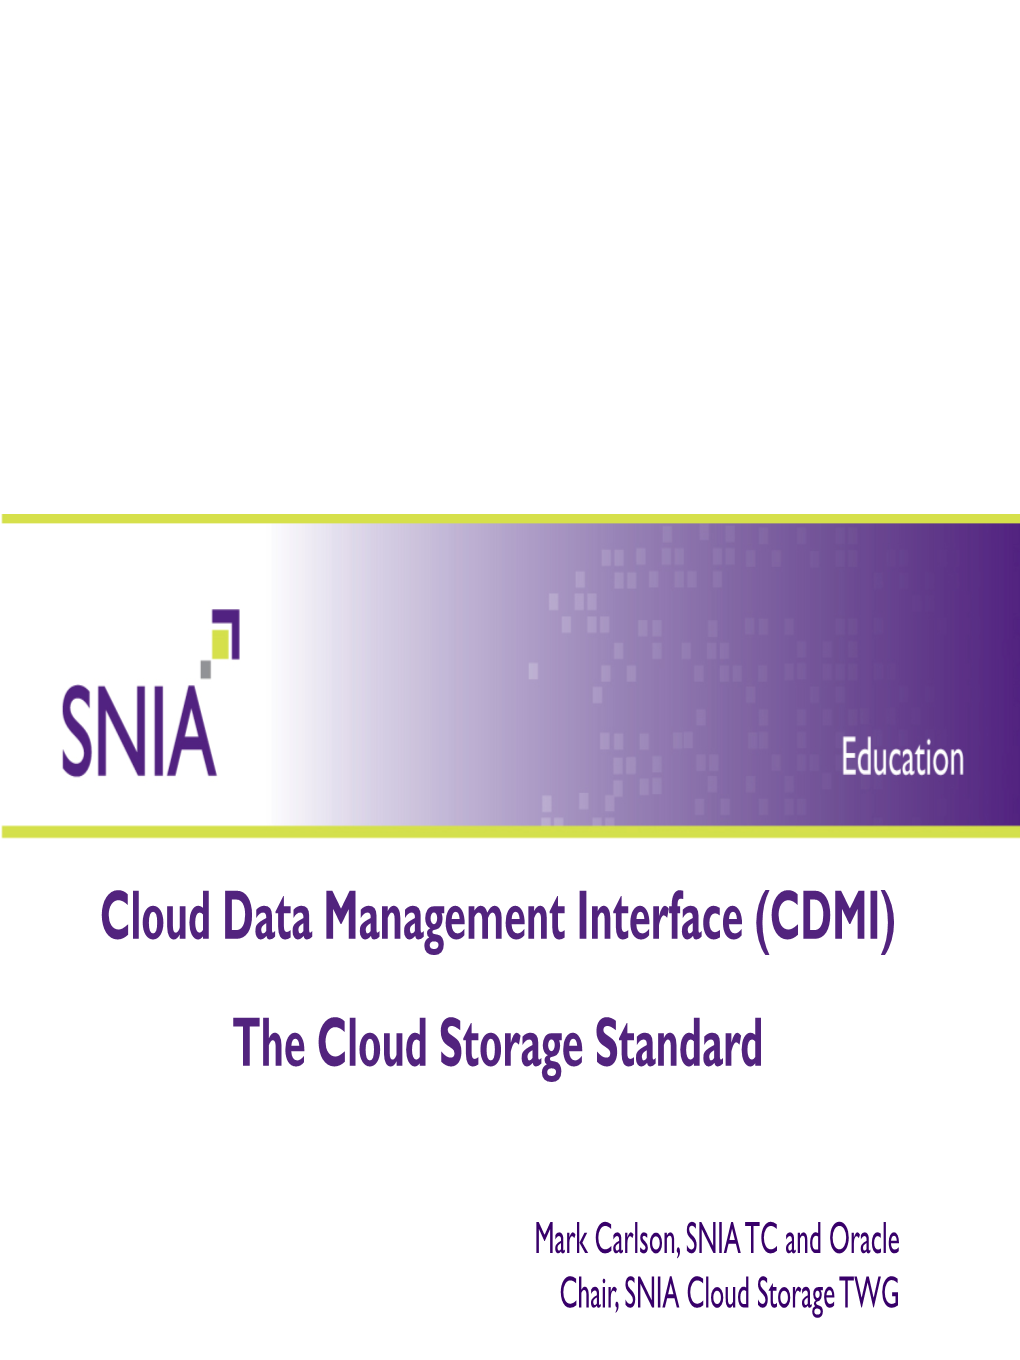 The Cloud Storage Standard